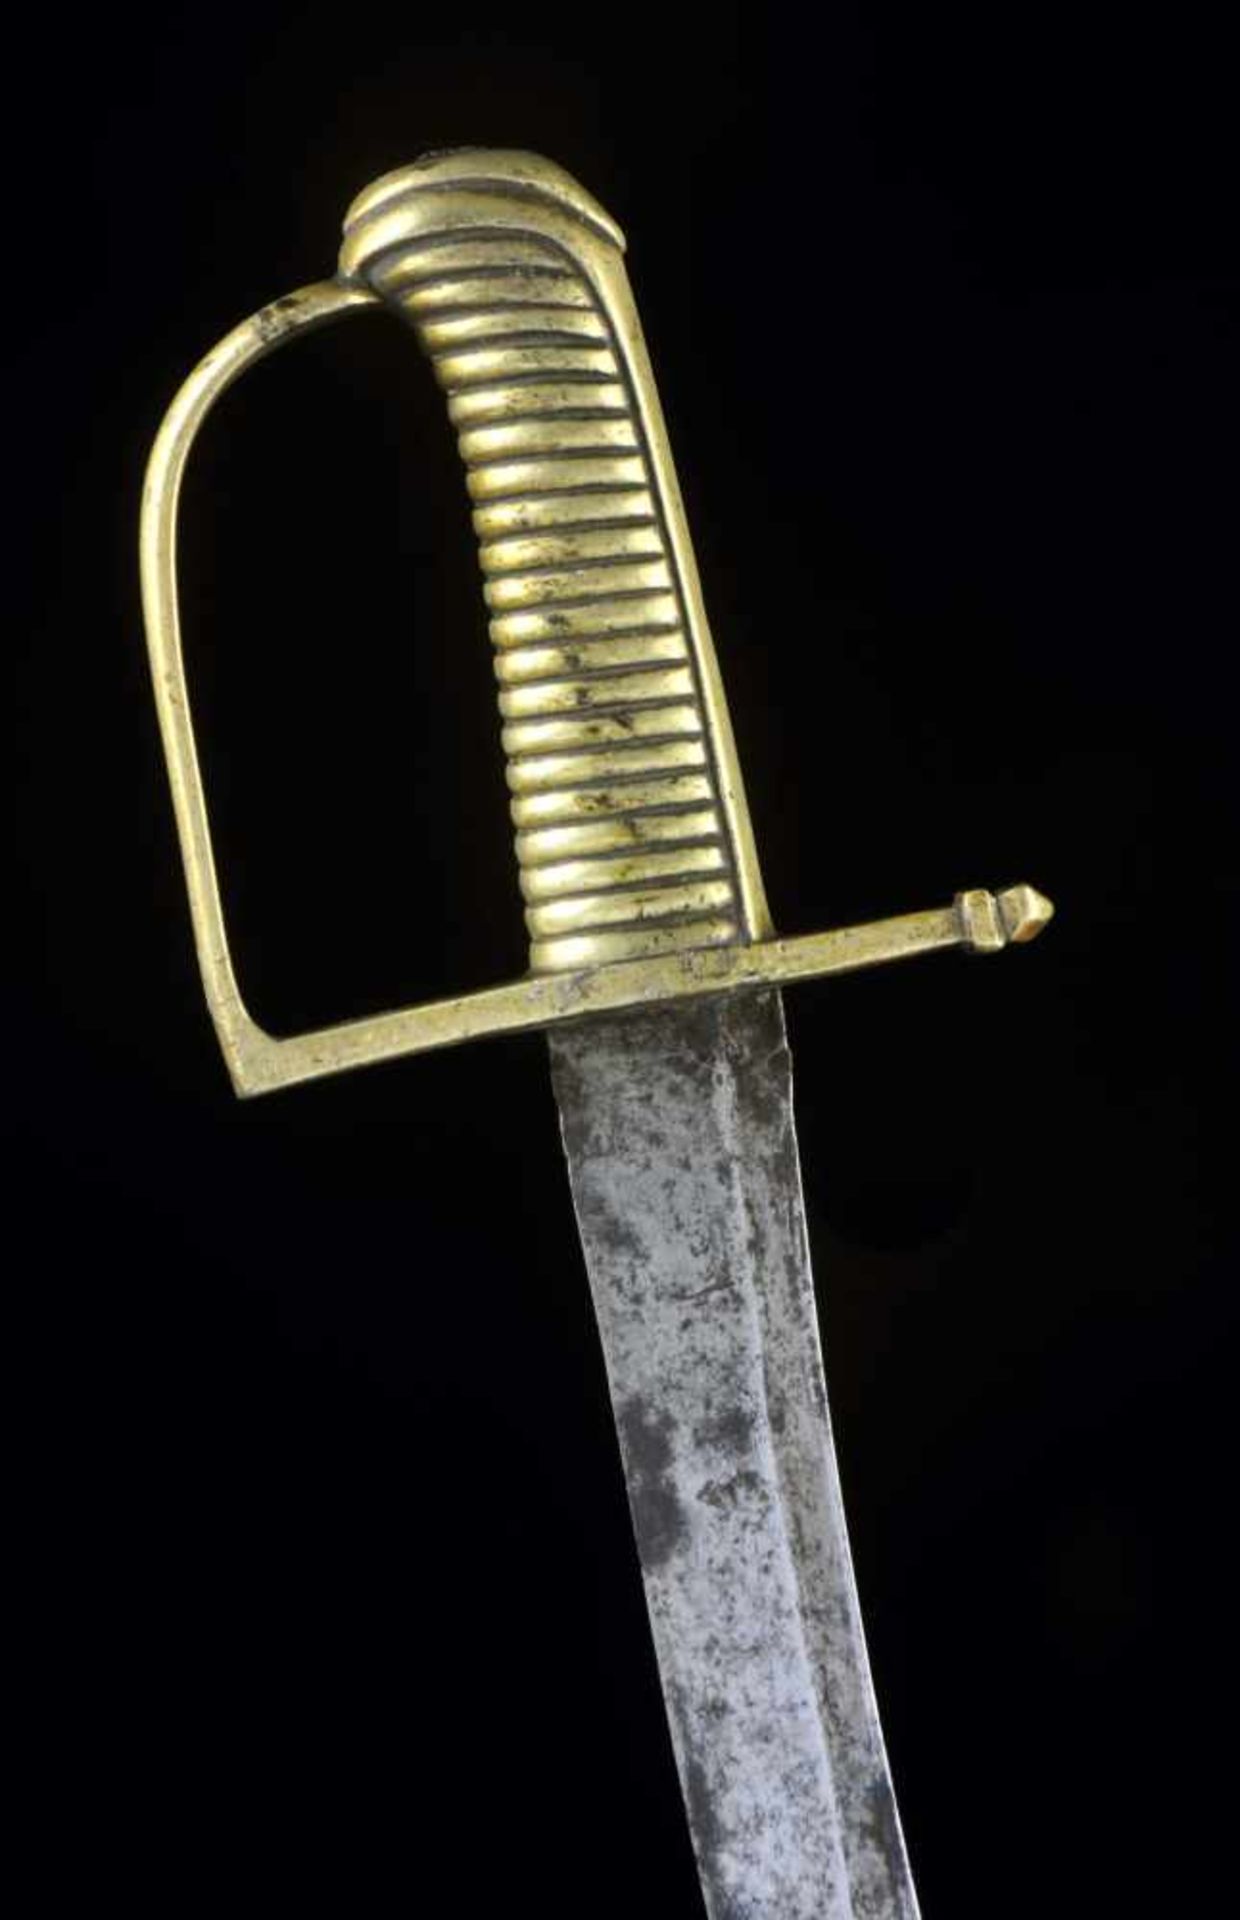 A FRENCH “BRIQUET” INFANTRY SWORD, MODEL 1767, BY MARTIN, LATE 18TH CENTURY. Sabre Briquet d’